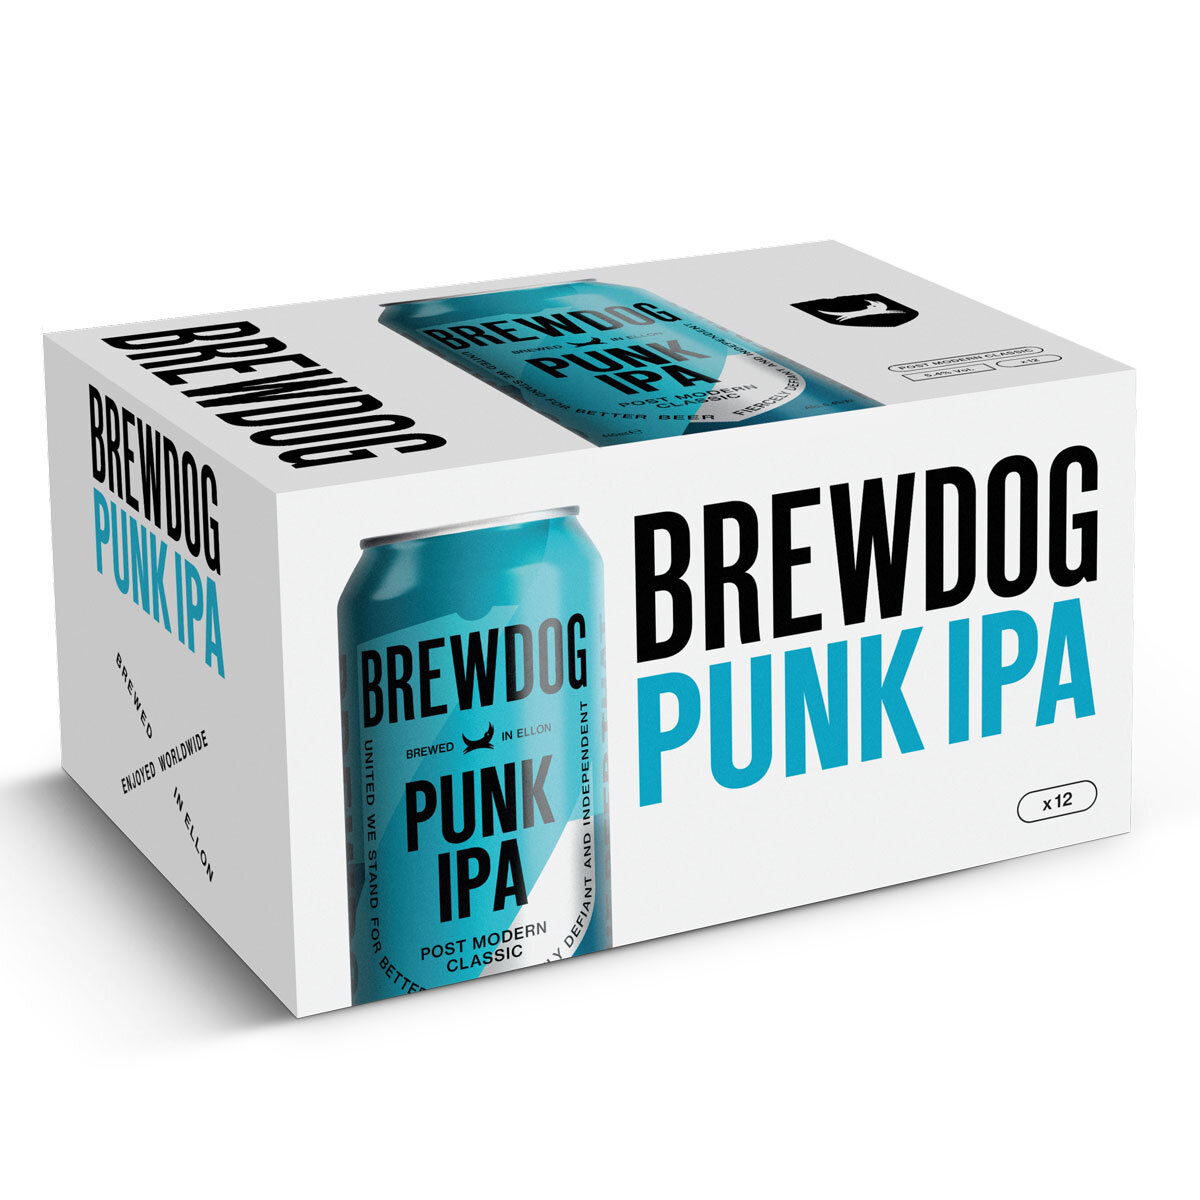 Brewdog Punk IPA, 12 x 440ml